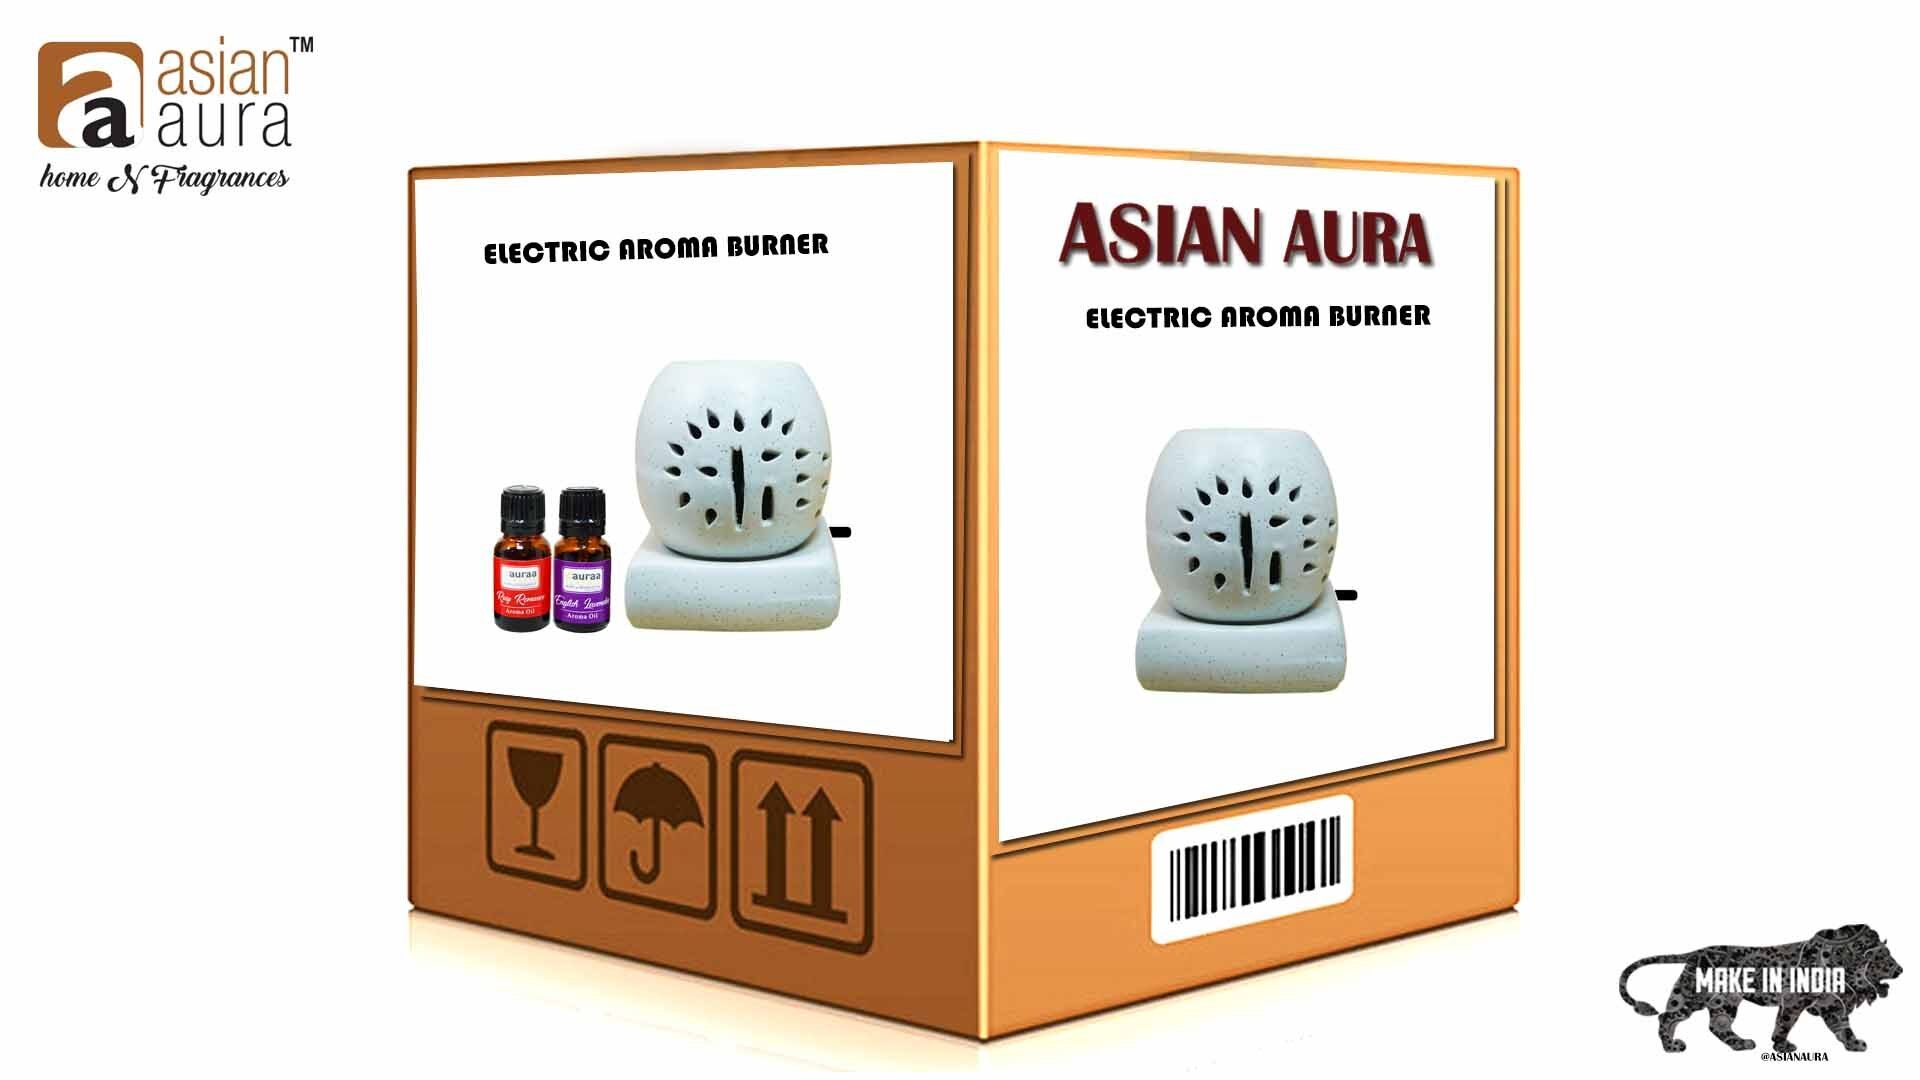 Asian Aura Ceramic Aromatic Oil Diffuser with 2 oil bottles AAEB 0018-W